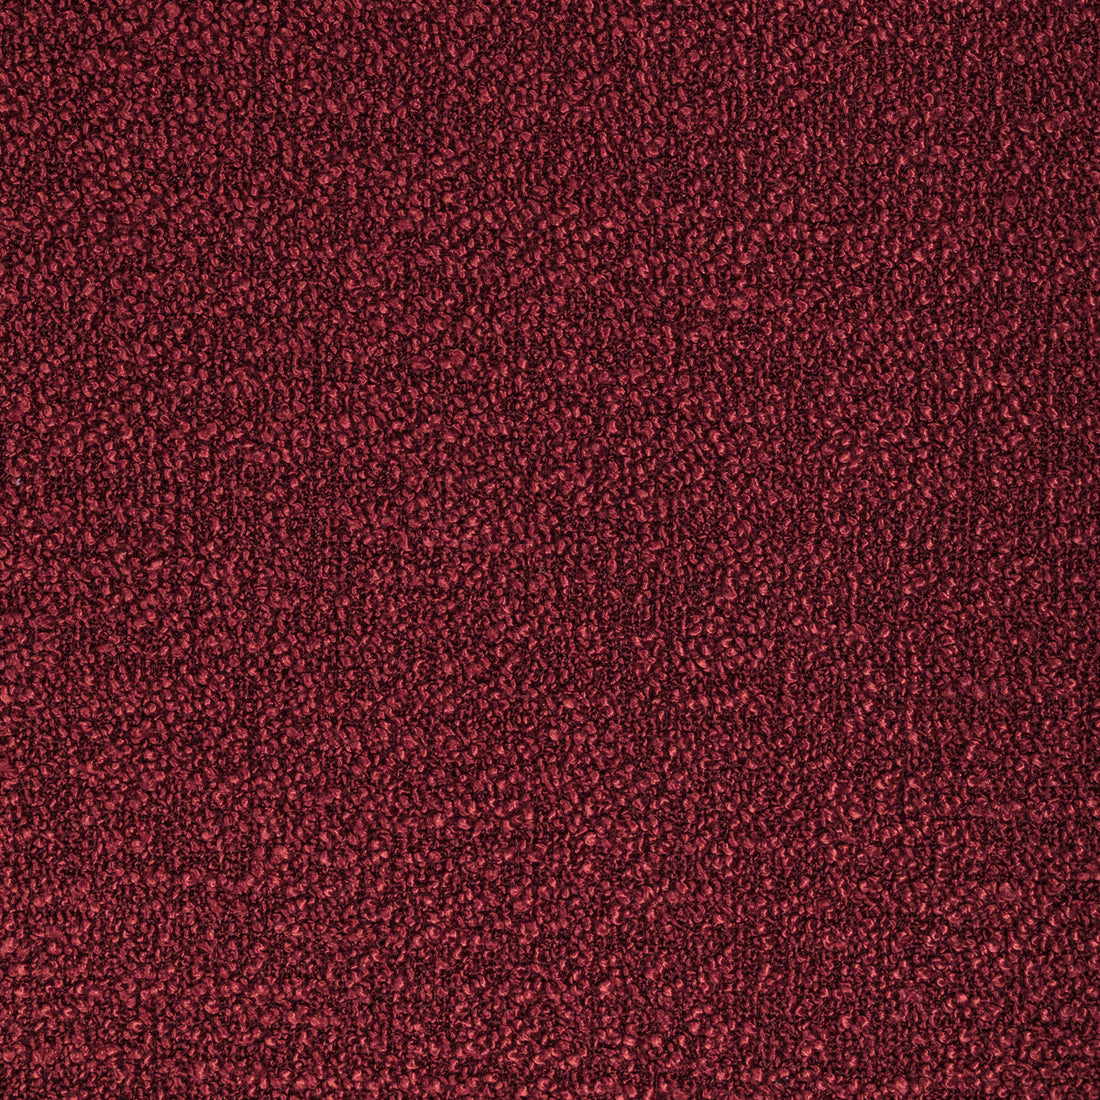 Kravet Smart fabric in 36857-624 color - pattern 36857.624.0 - by Kravet Smart in the Performance Kravetarmor collection